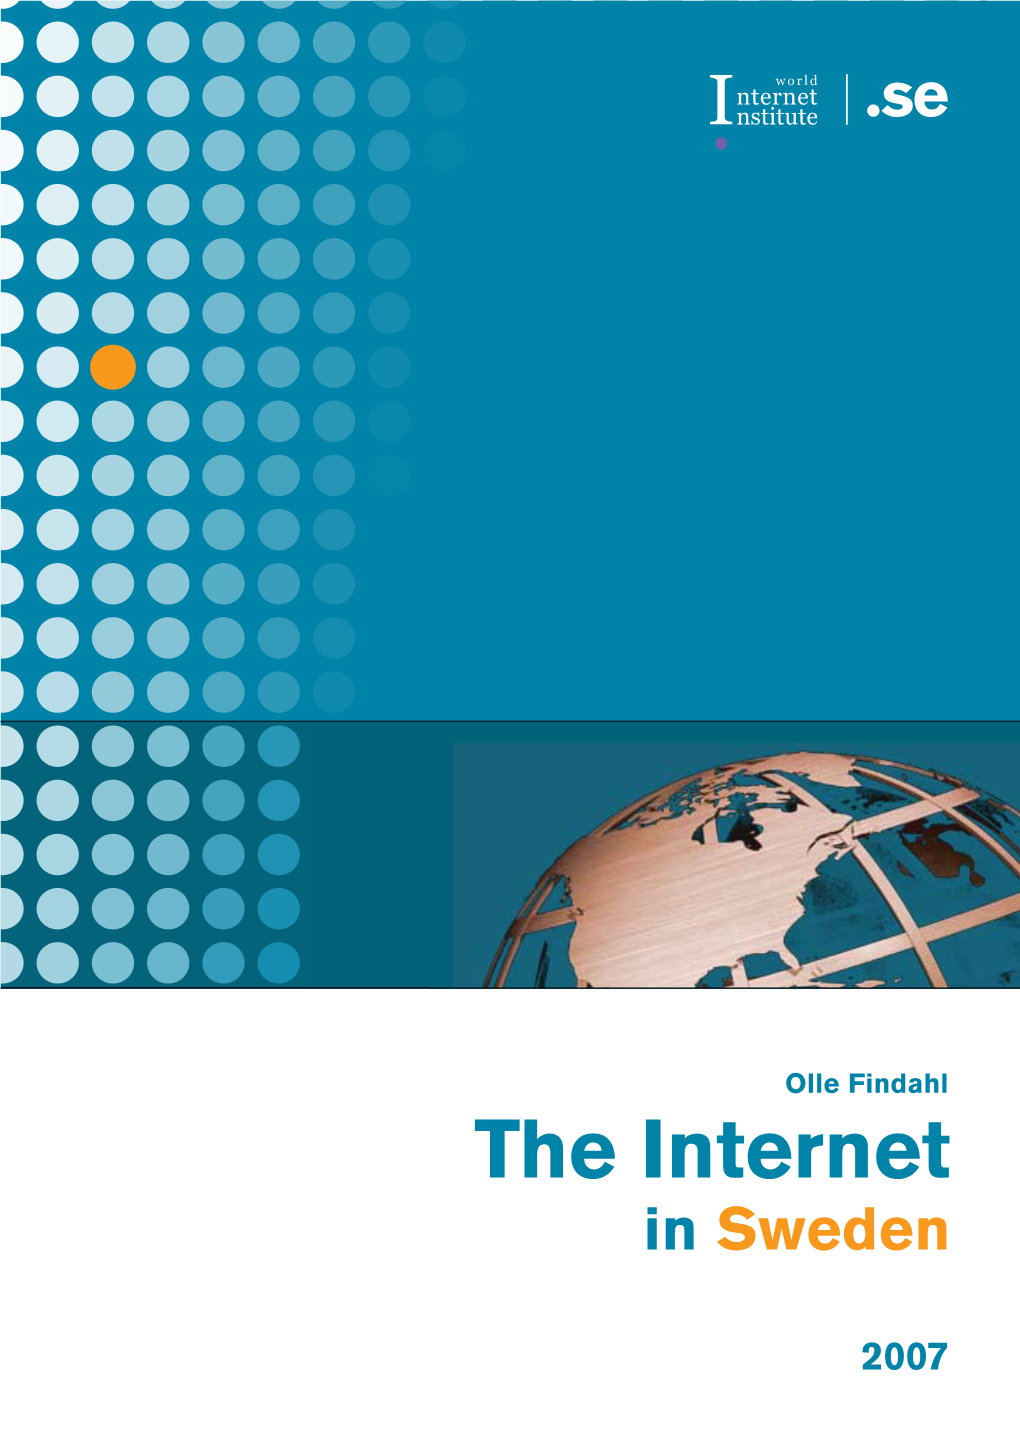 The Internet in Sweden